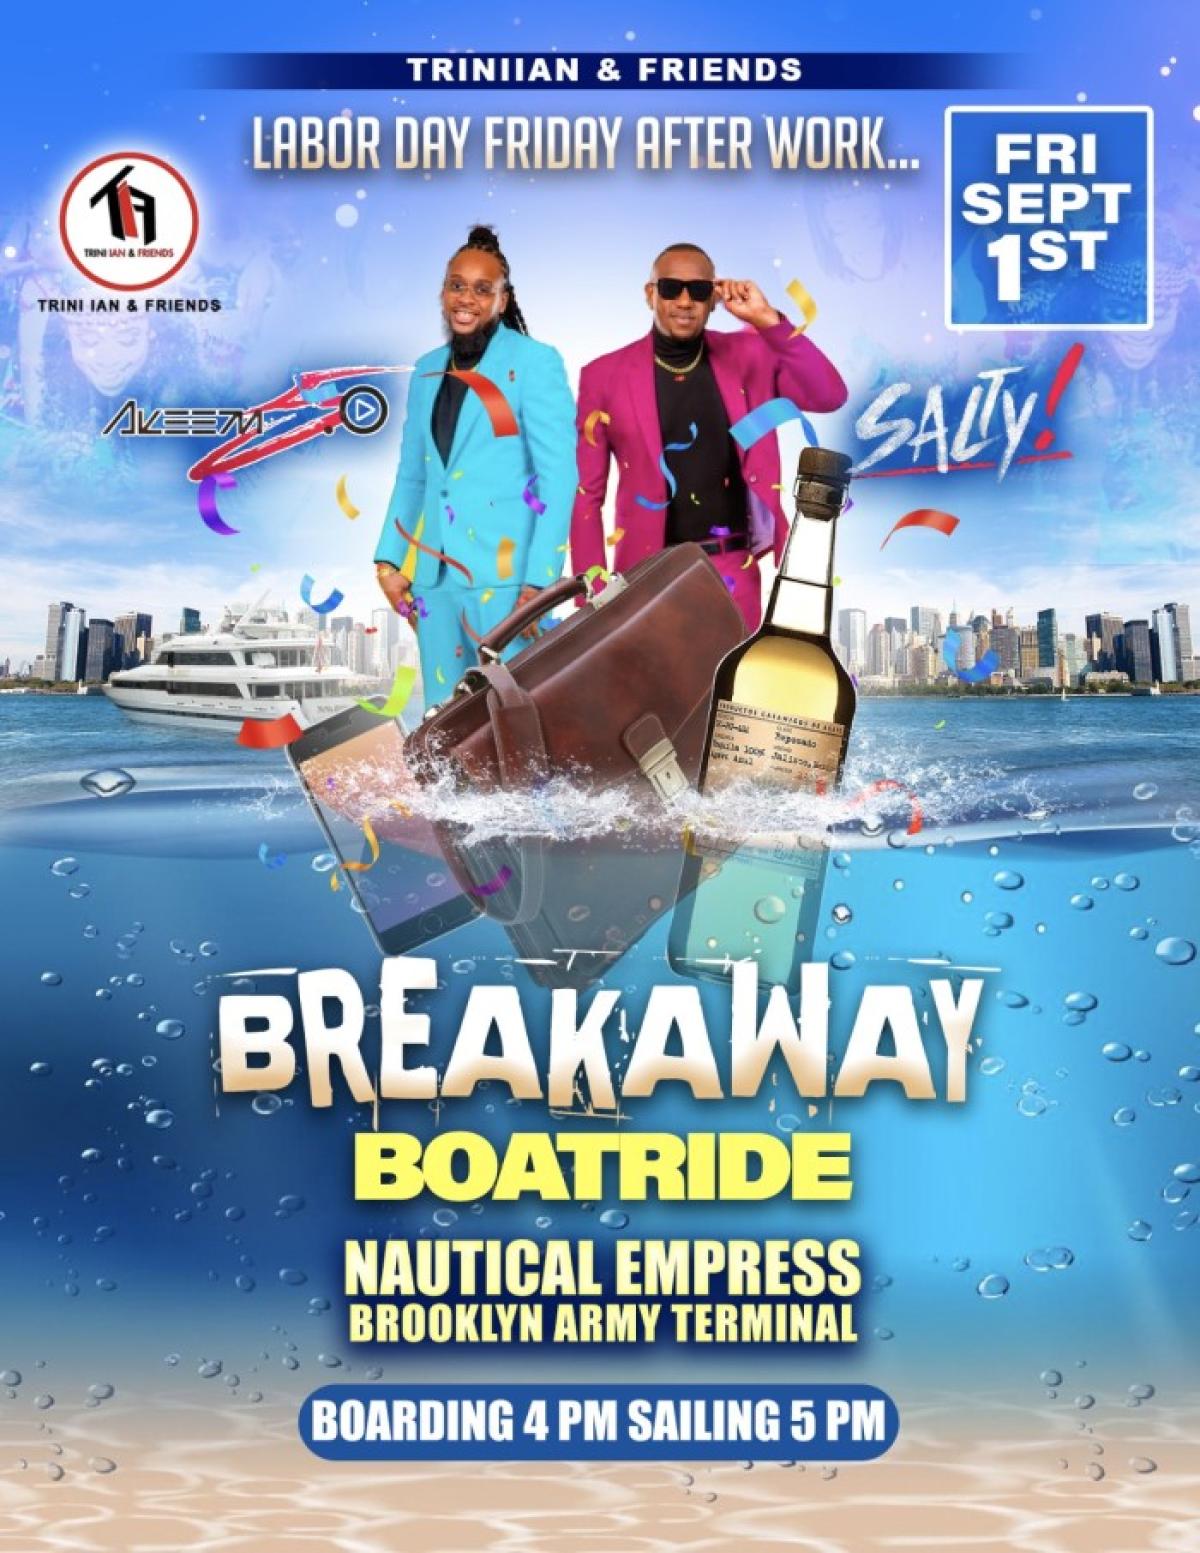 Break Away, Boatride flyer or graphic.